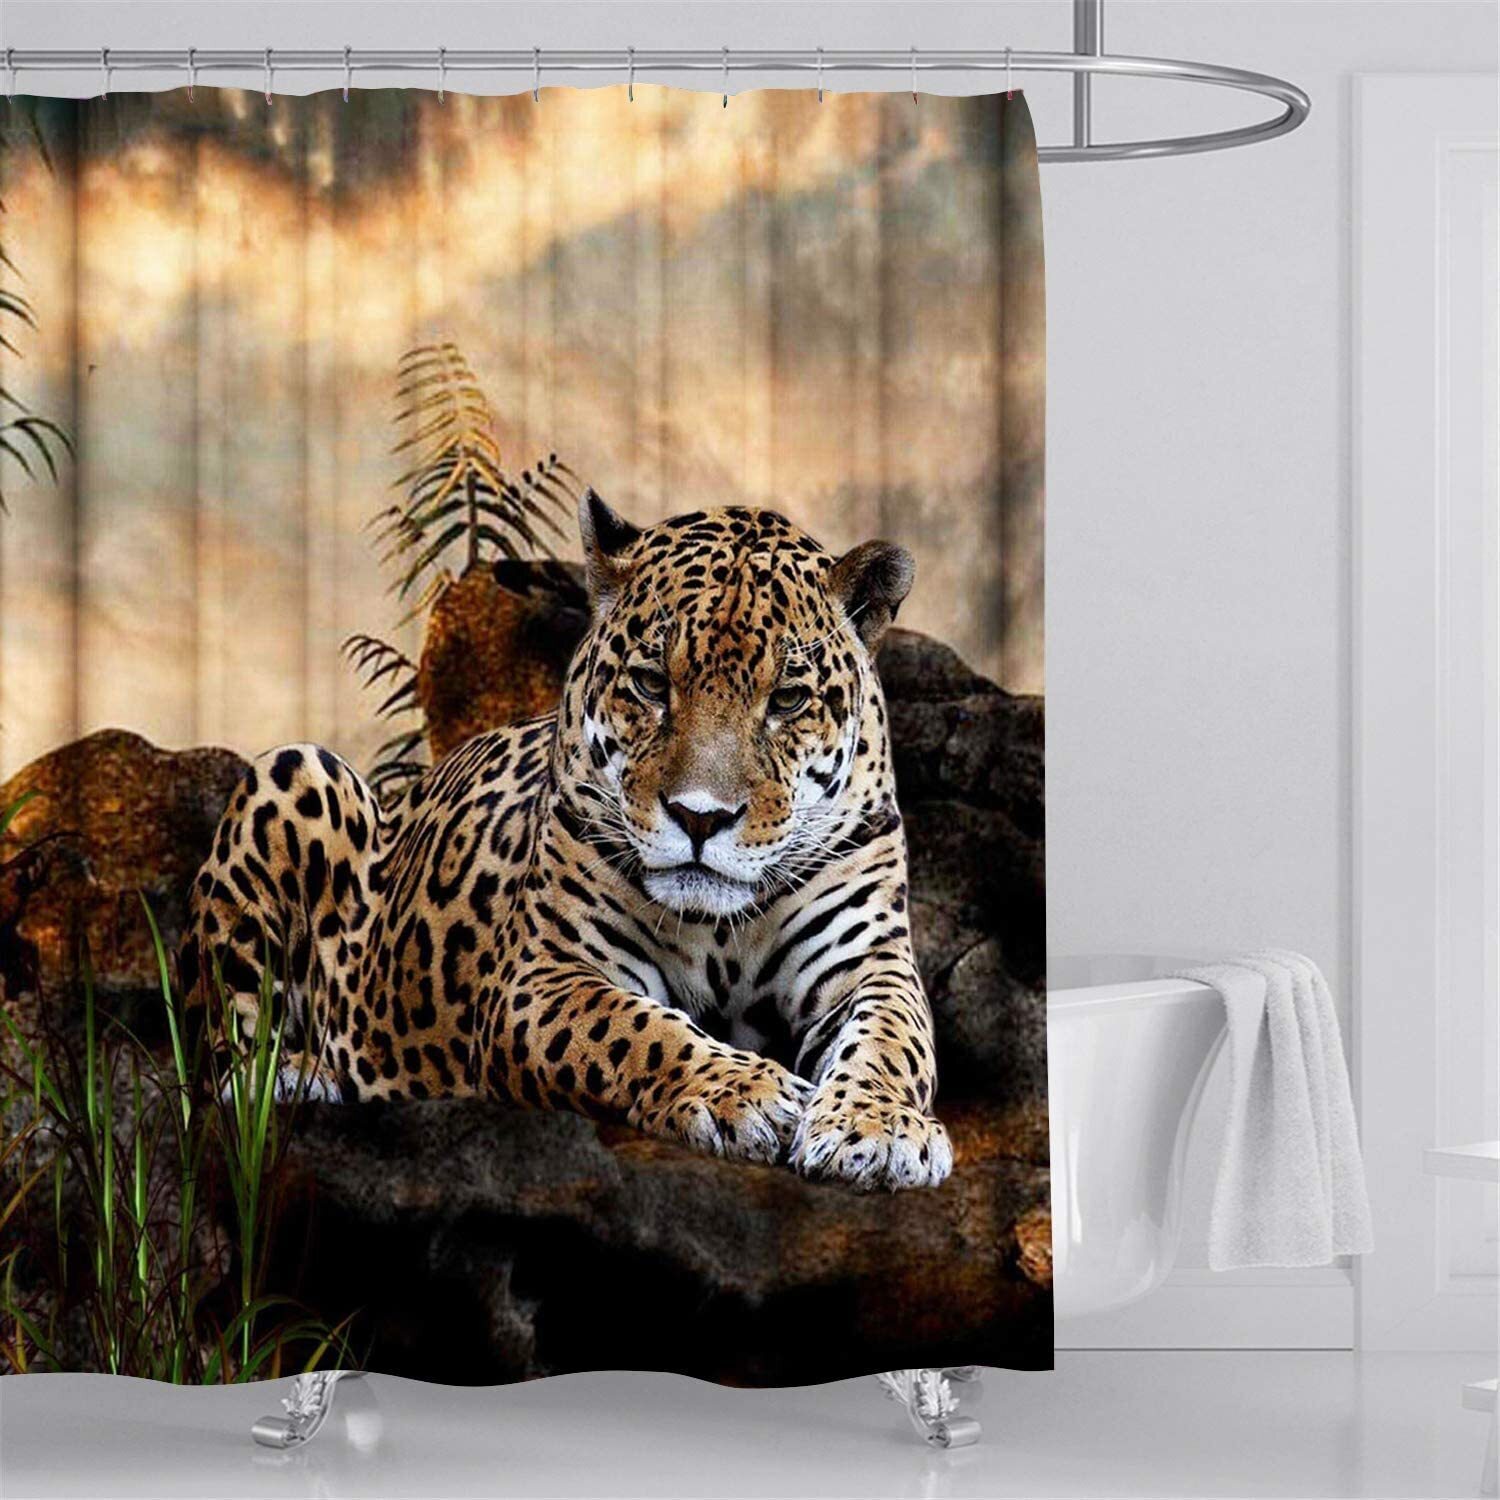 Realistic Leopard Shower Curtain